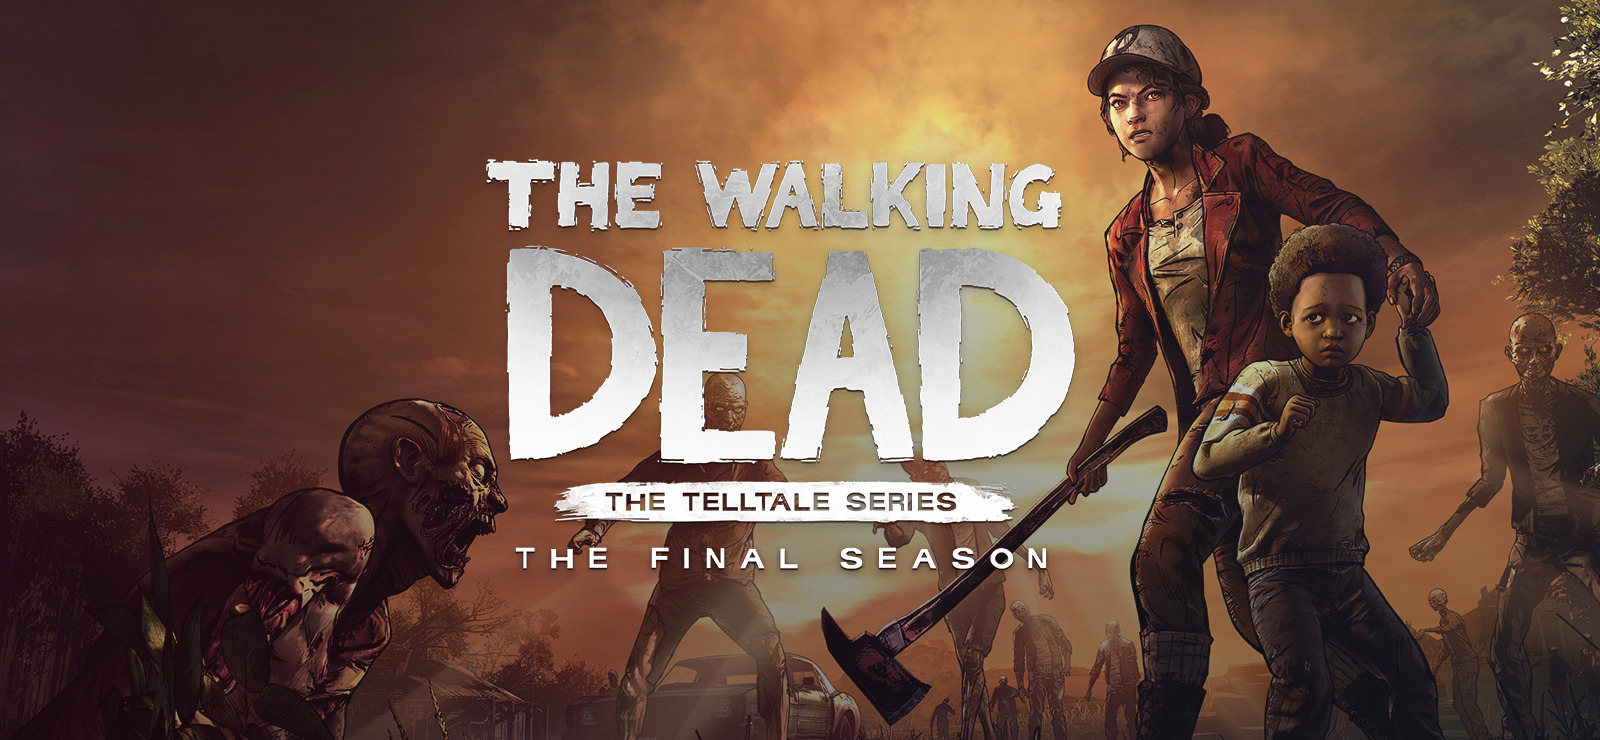 Зе волкин дед на русском. The Walking Dead the game Постер. TWD Telltale обложка. The Walking Dead: the game обложка.